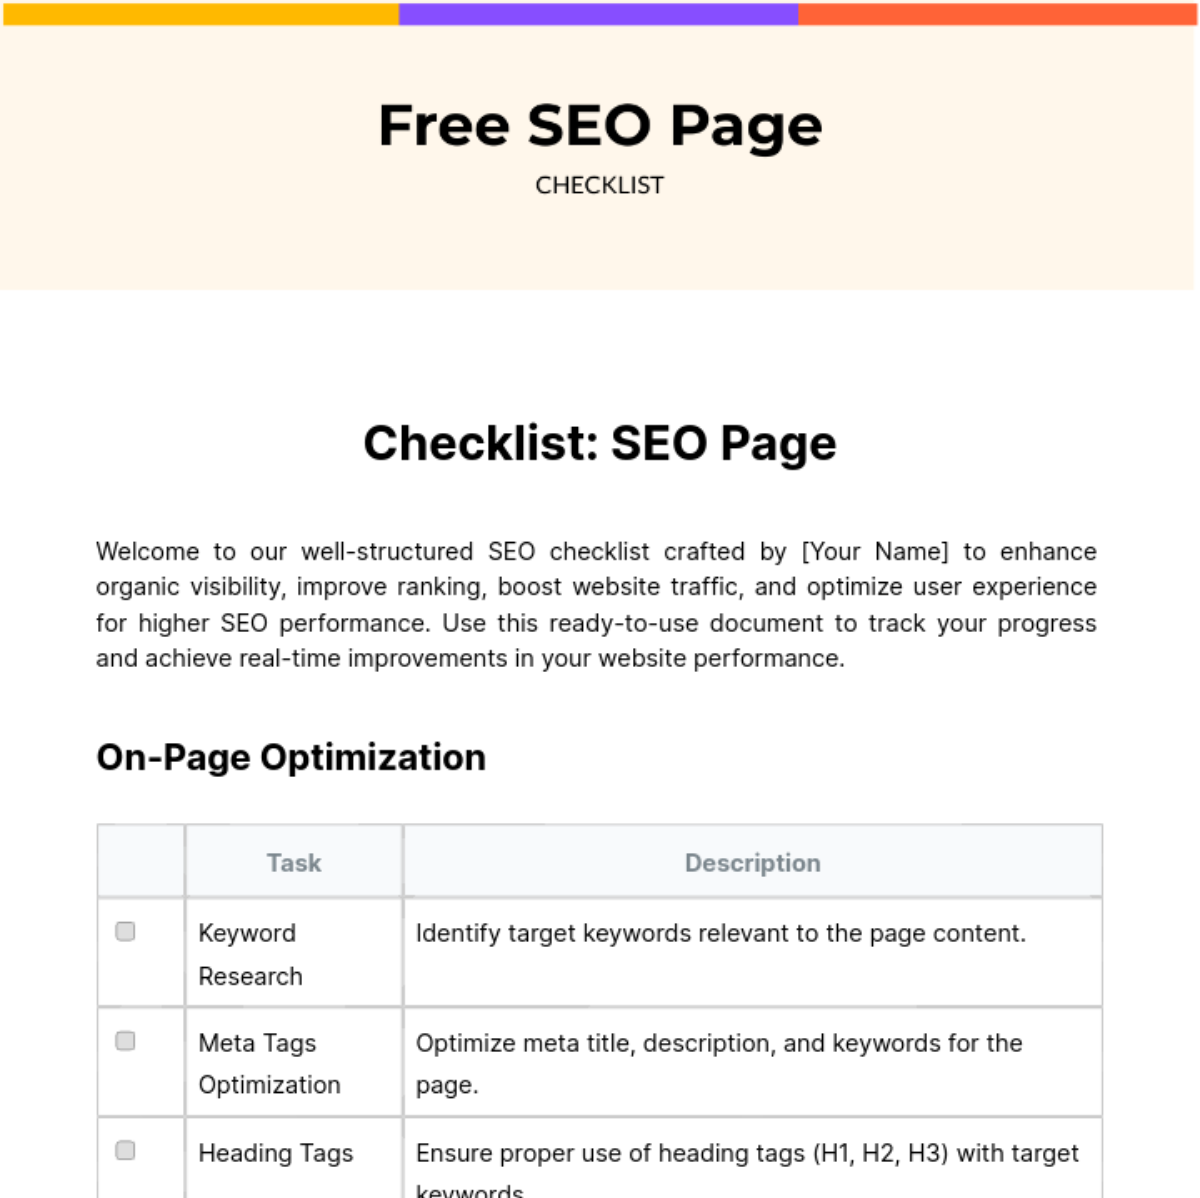 SEO Page Checklist Template